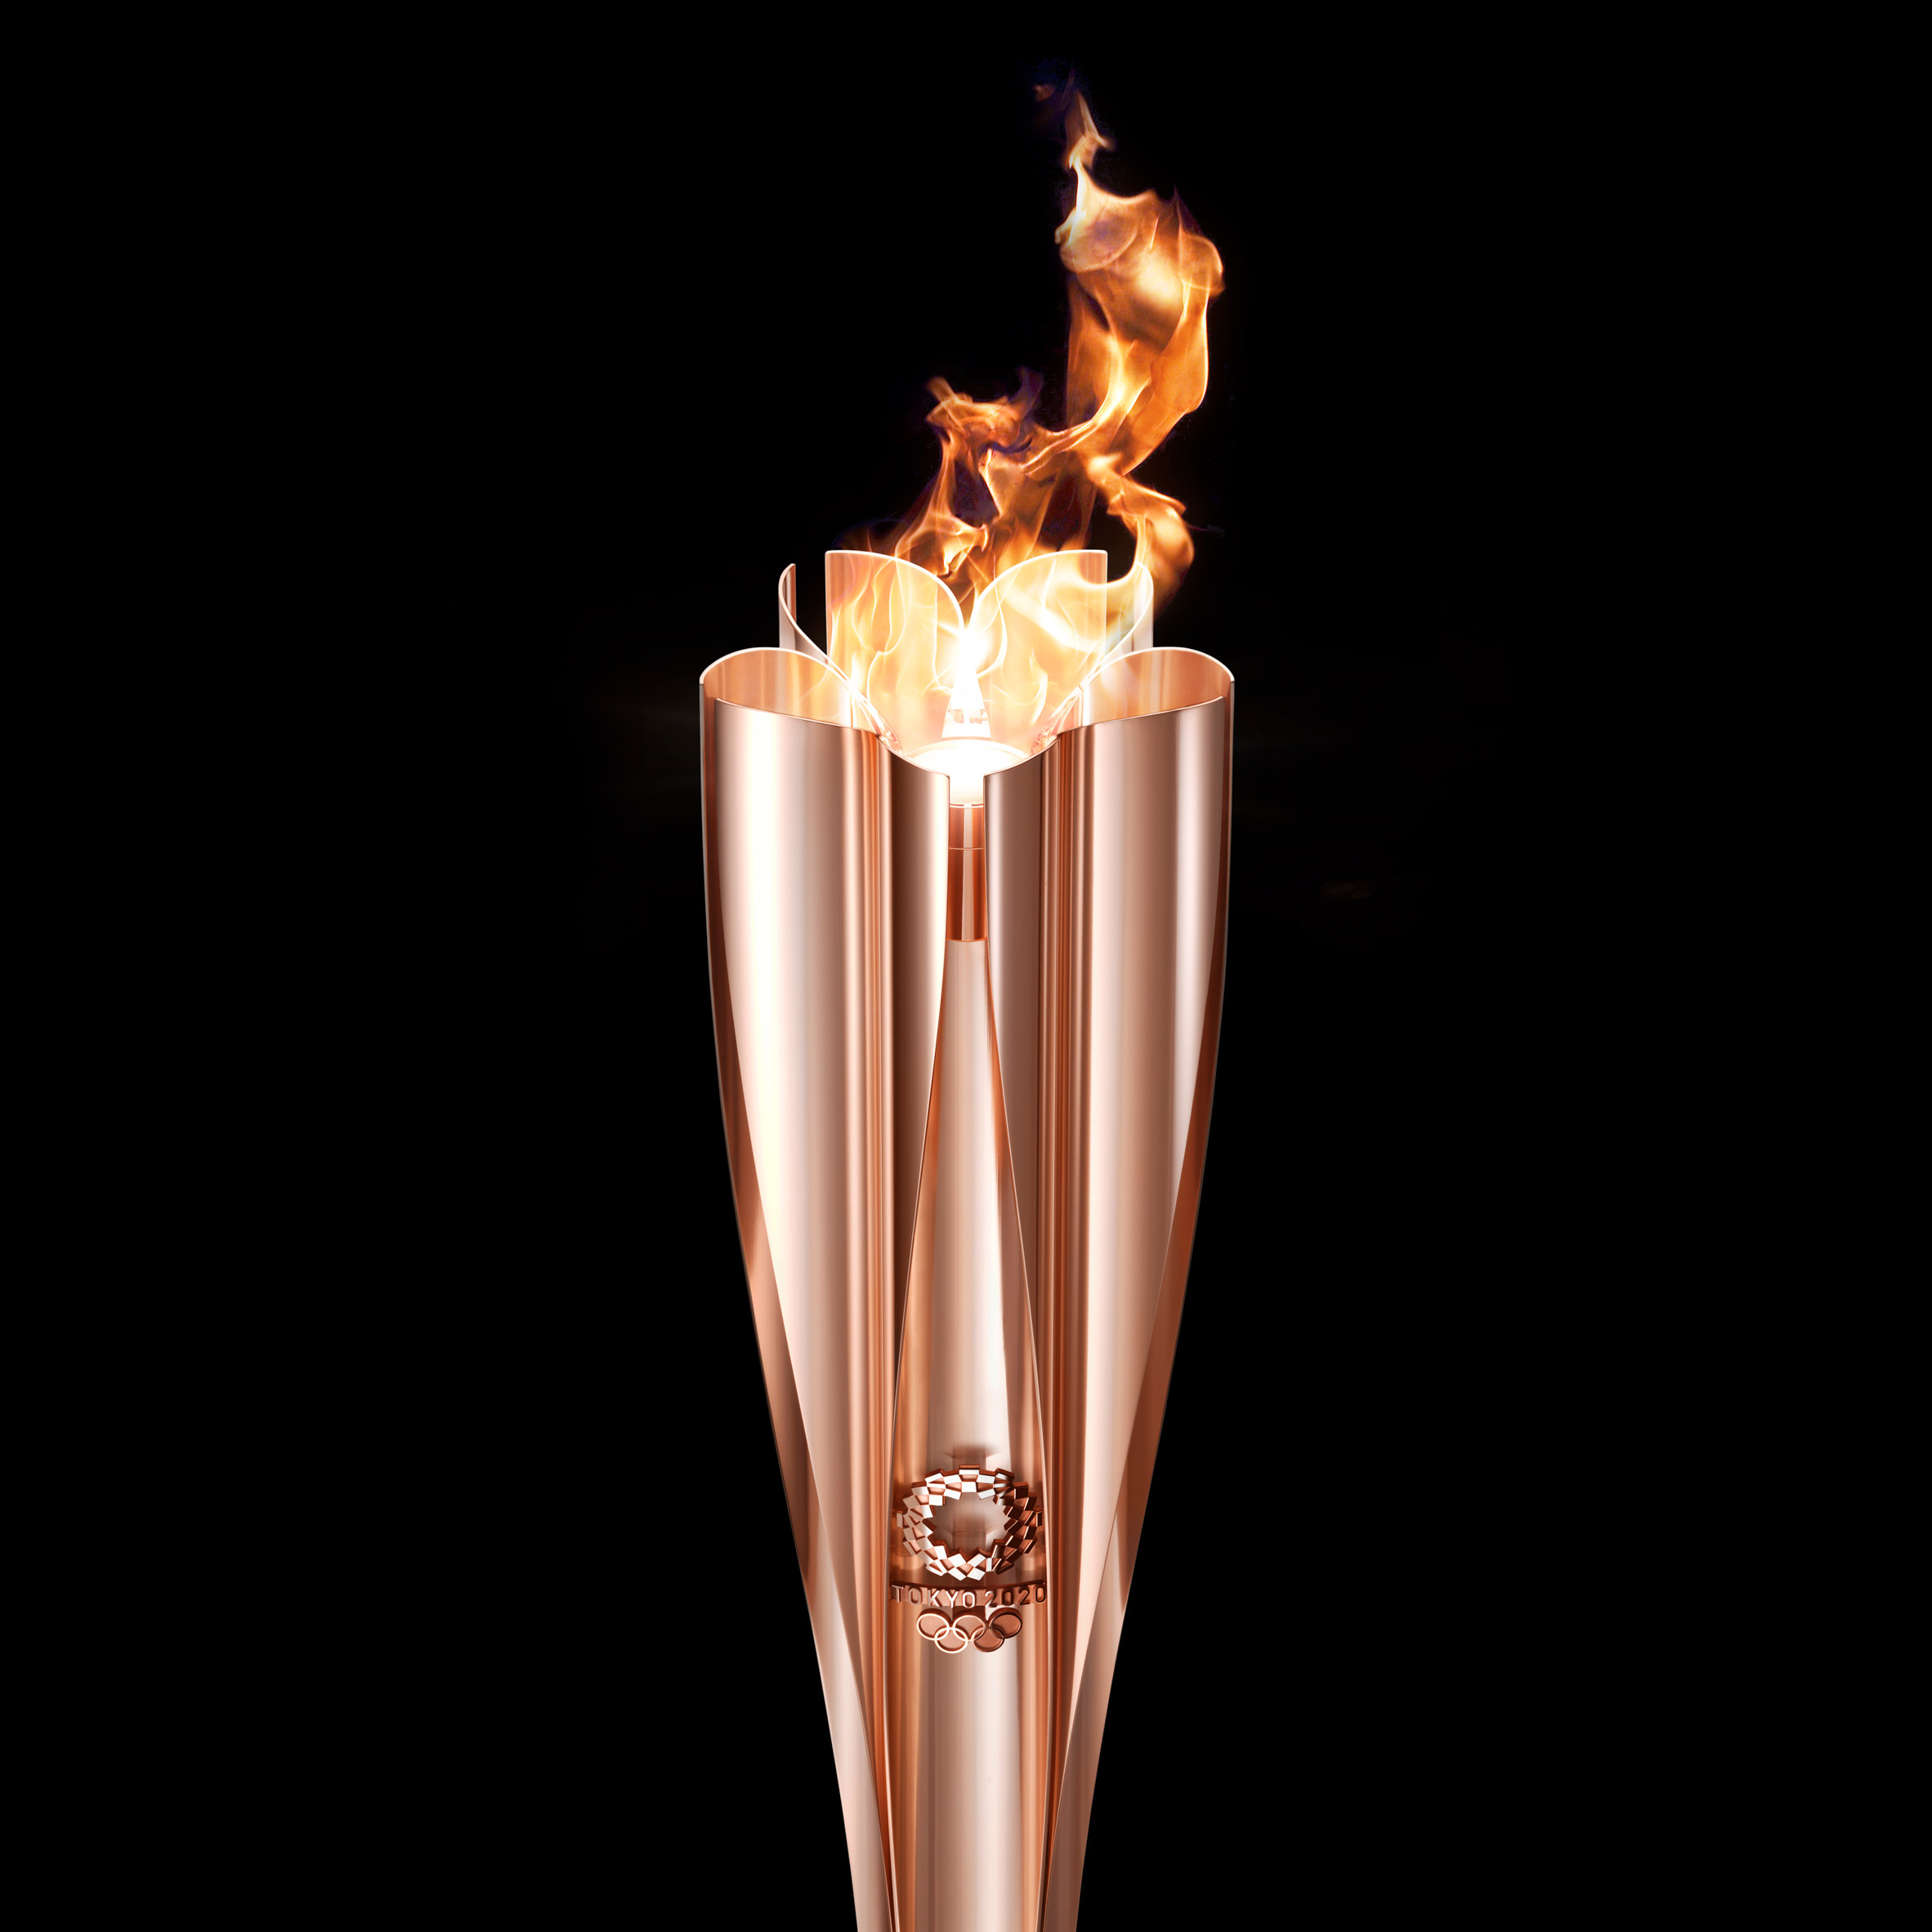 tokyo-2020-olympic-torch-design-_dezeen_2364_col_5